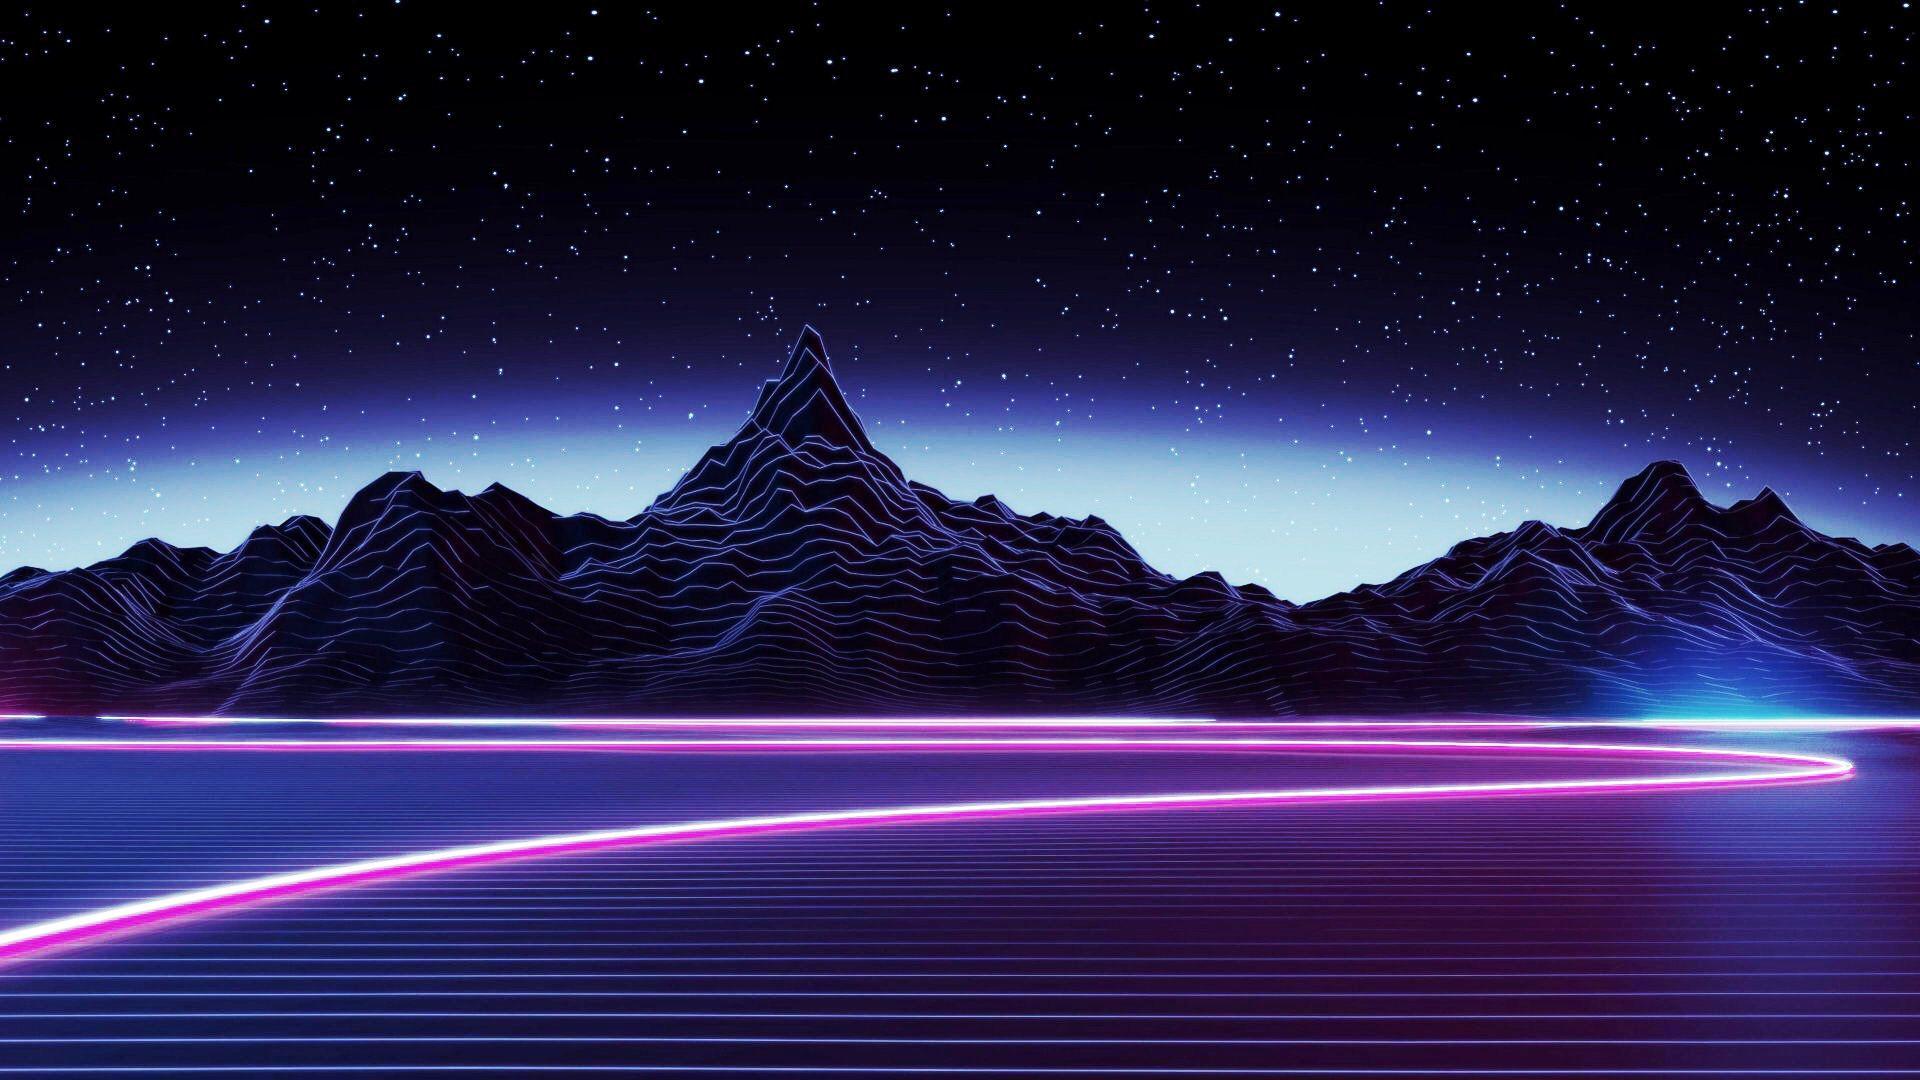 aesthetic 4k desktop mountain wallpapers neon landscape retro dark sky purple backgrounds computer 1080p space laptop pc anime ultra wallpaperaccess